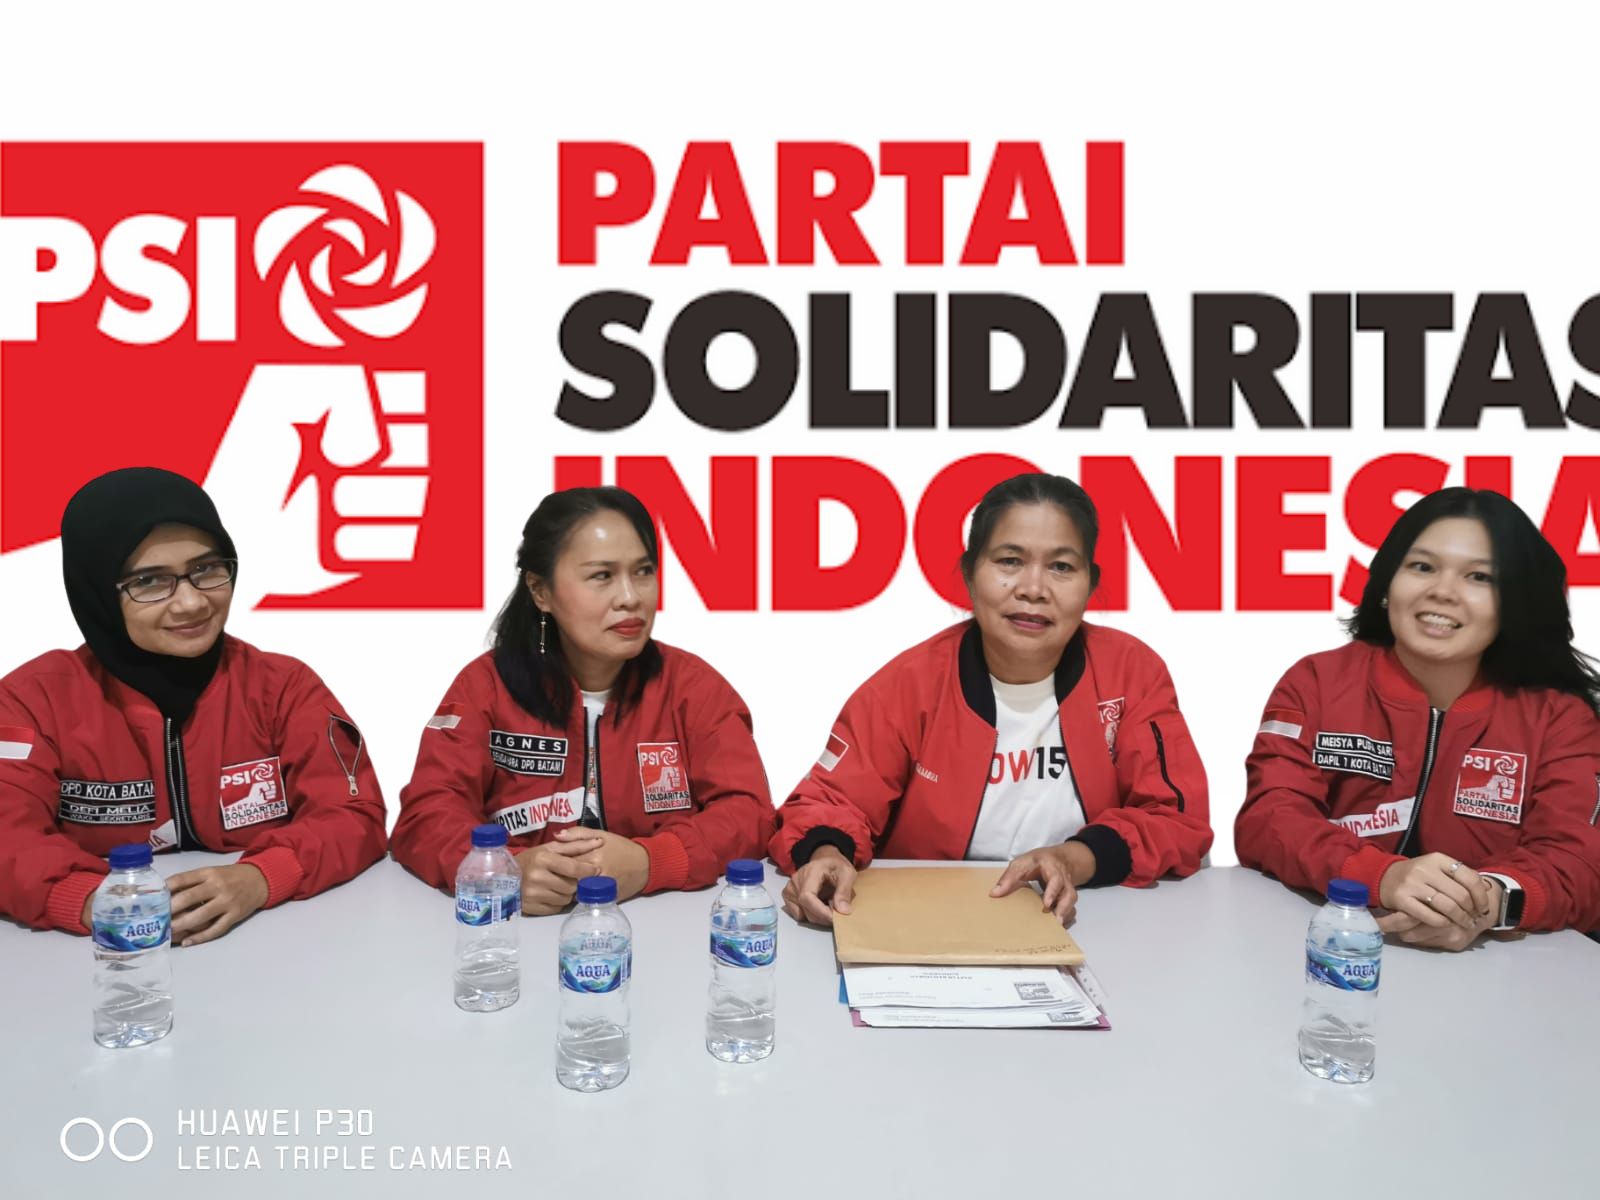 partai solidaritas indonesia